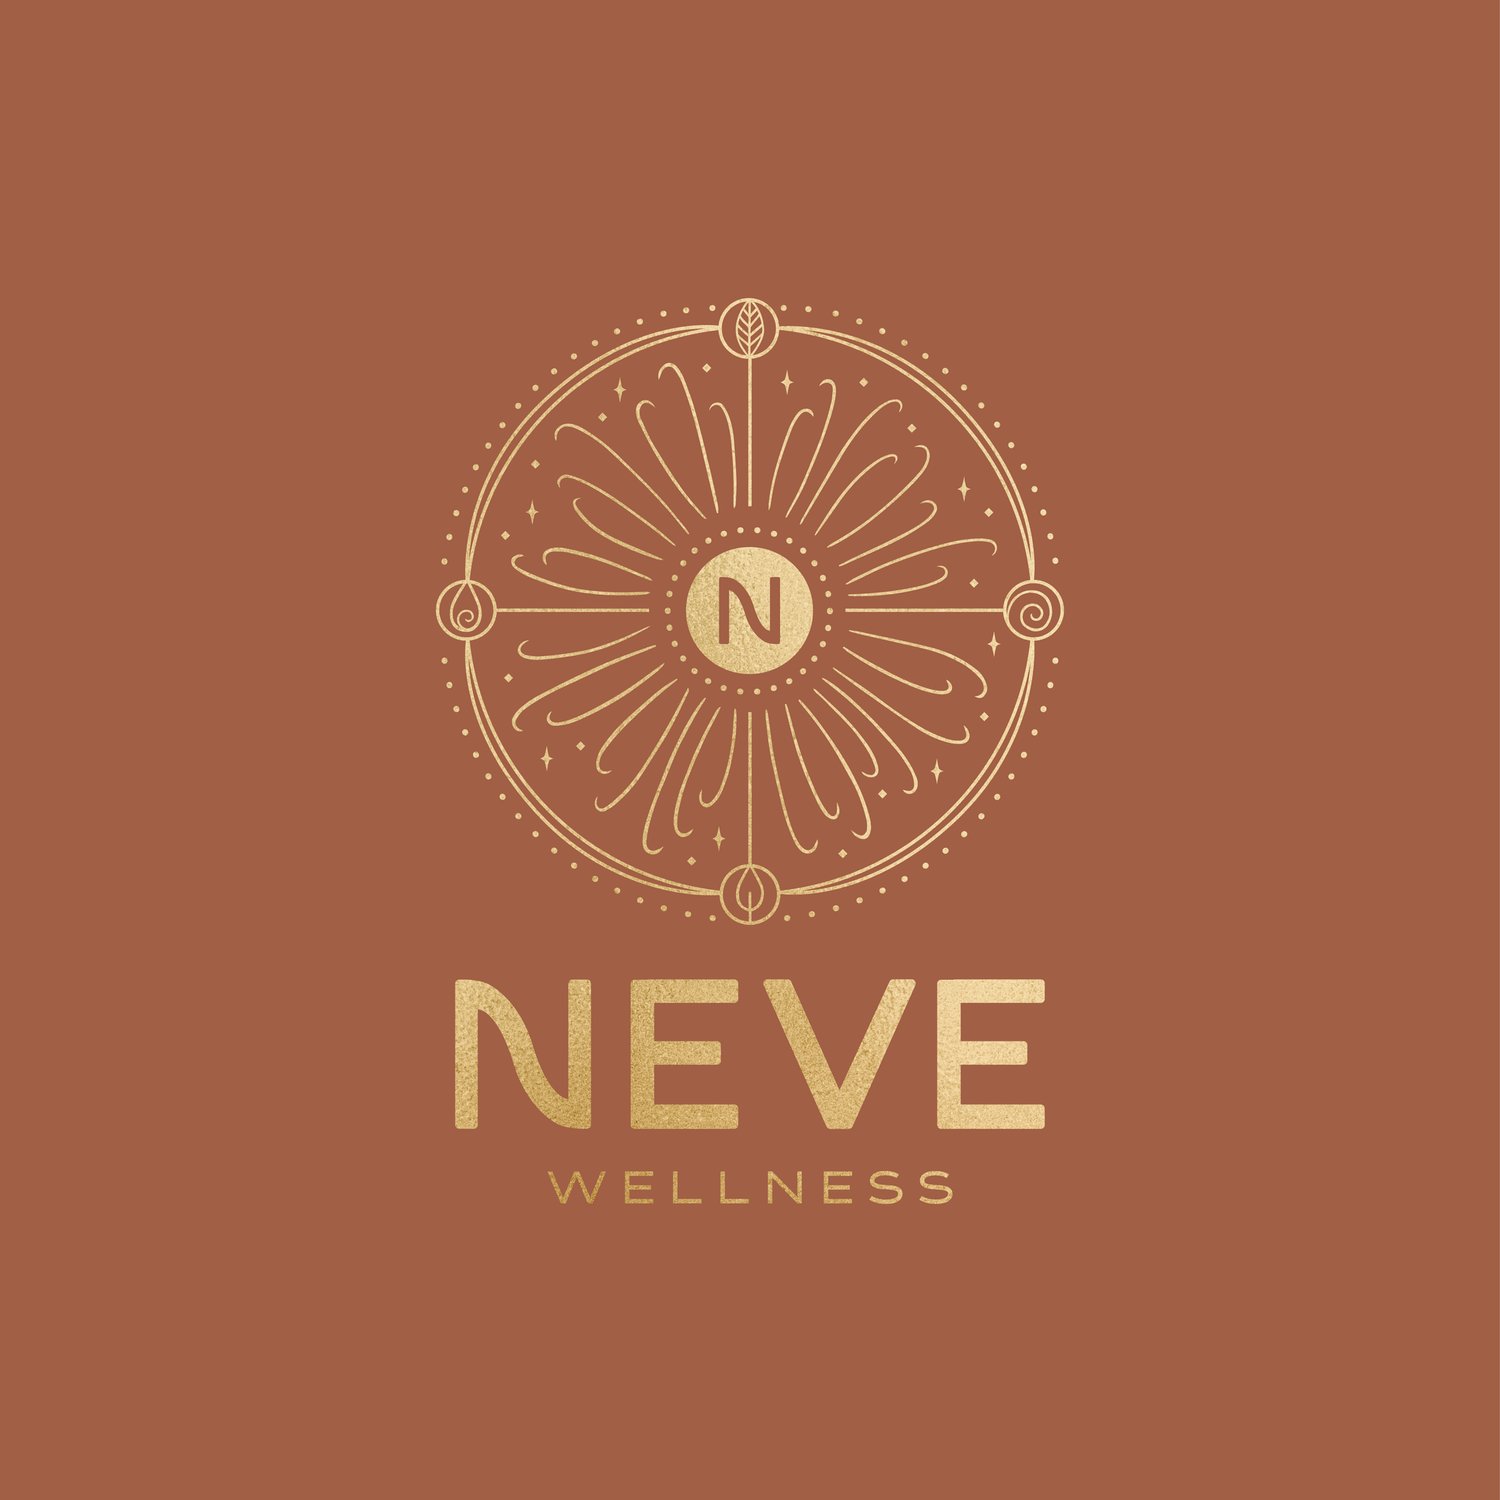 Wellness brand logo